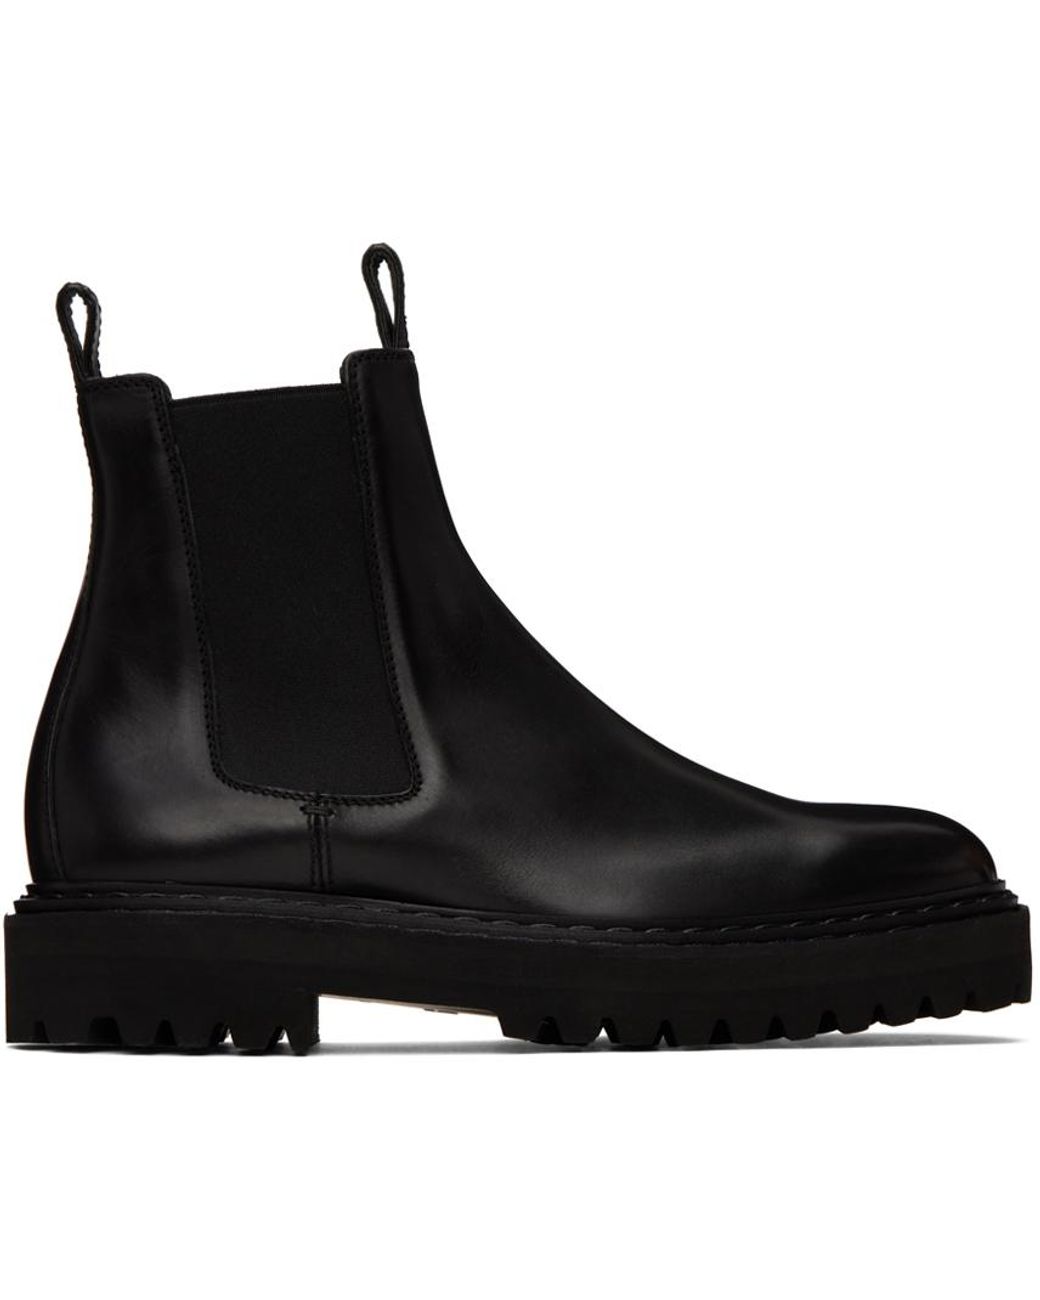 Officine Creative Pistols 003 Chelsea Boots in Nero (Black) for Men | Lyst